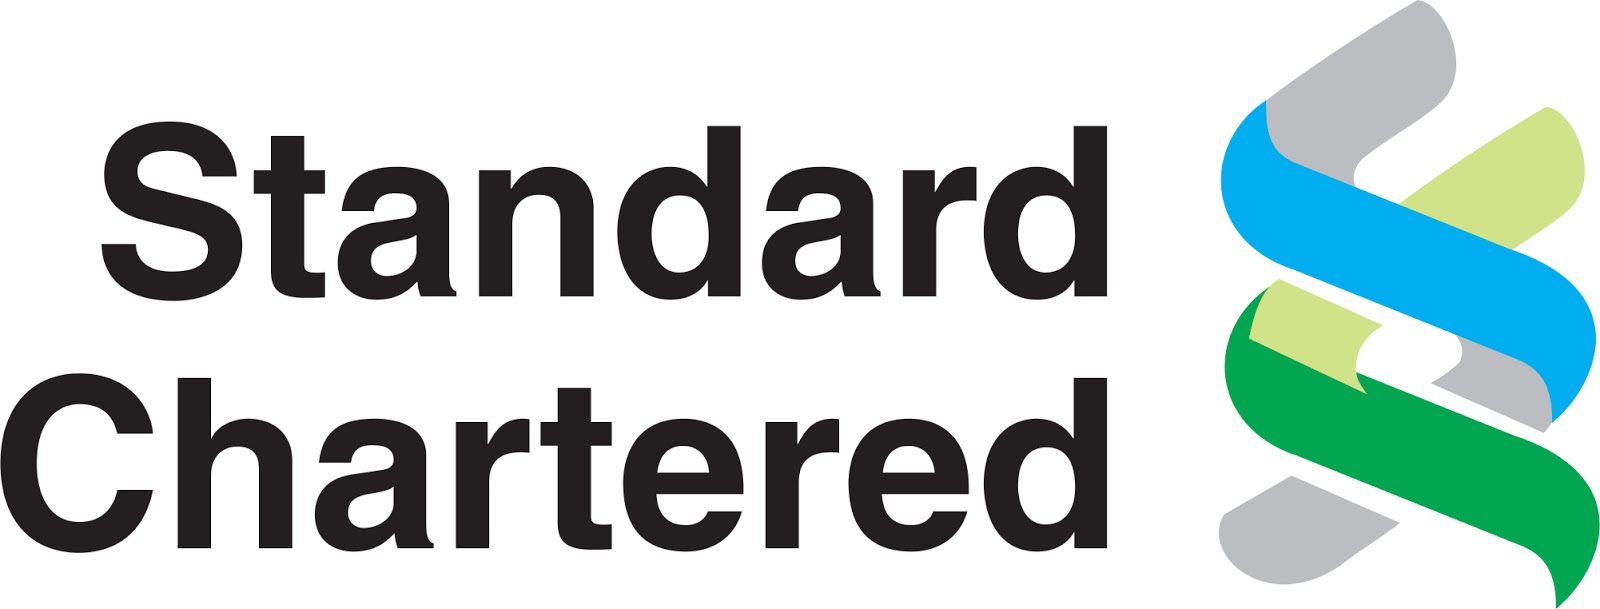 Logo Standard Chartered Bank Vector Download CDR